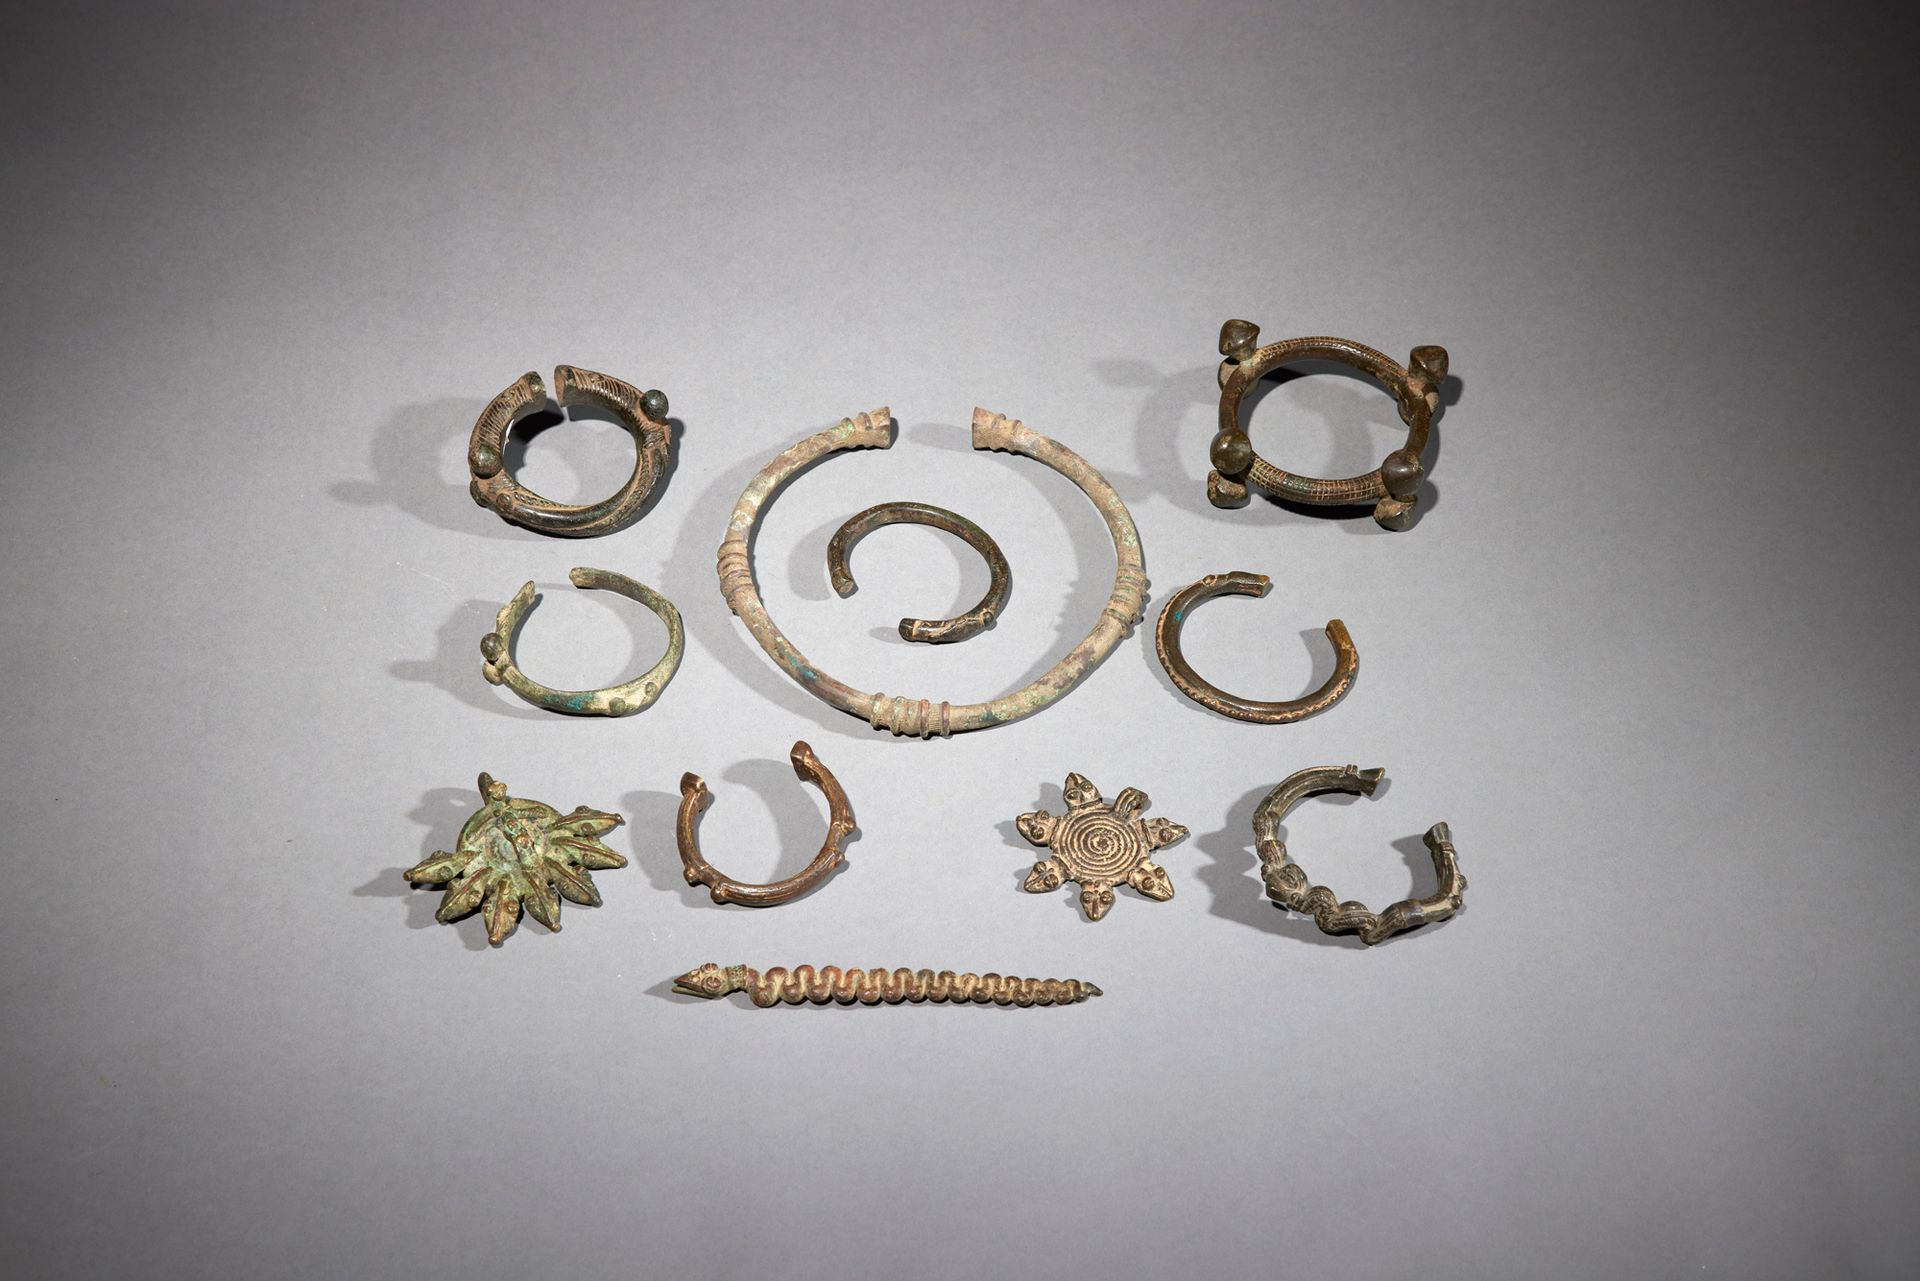 Null 11件甘氏文物

布基纳法索

铜质

H.5.8至16.3厘米



一套11件青铜甘氏文物，包括8个手镯和3条蛇，其中两条蛇盘着多个头。